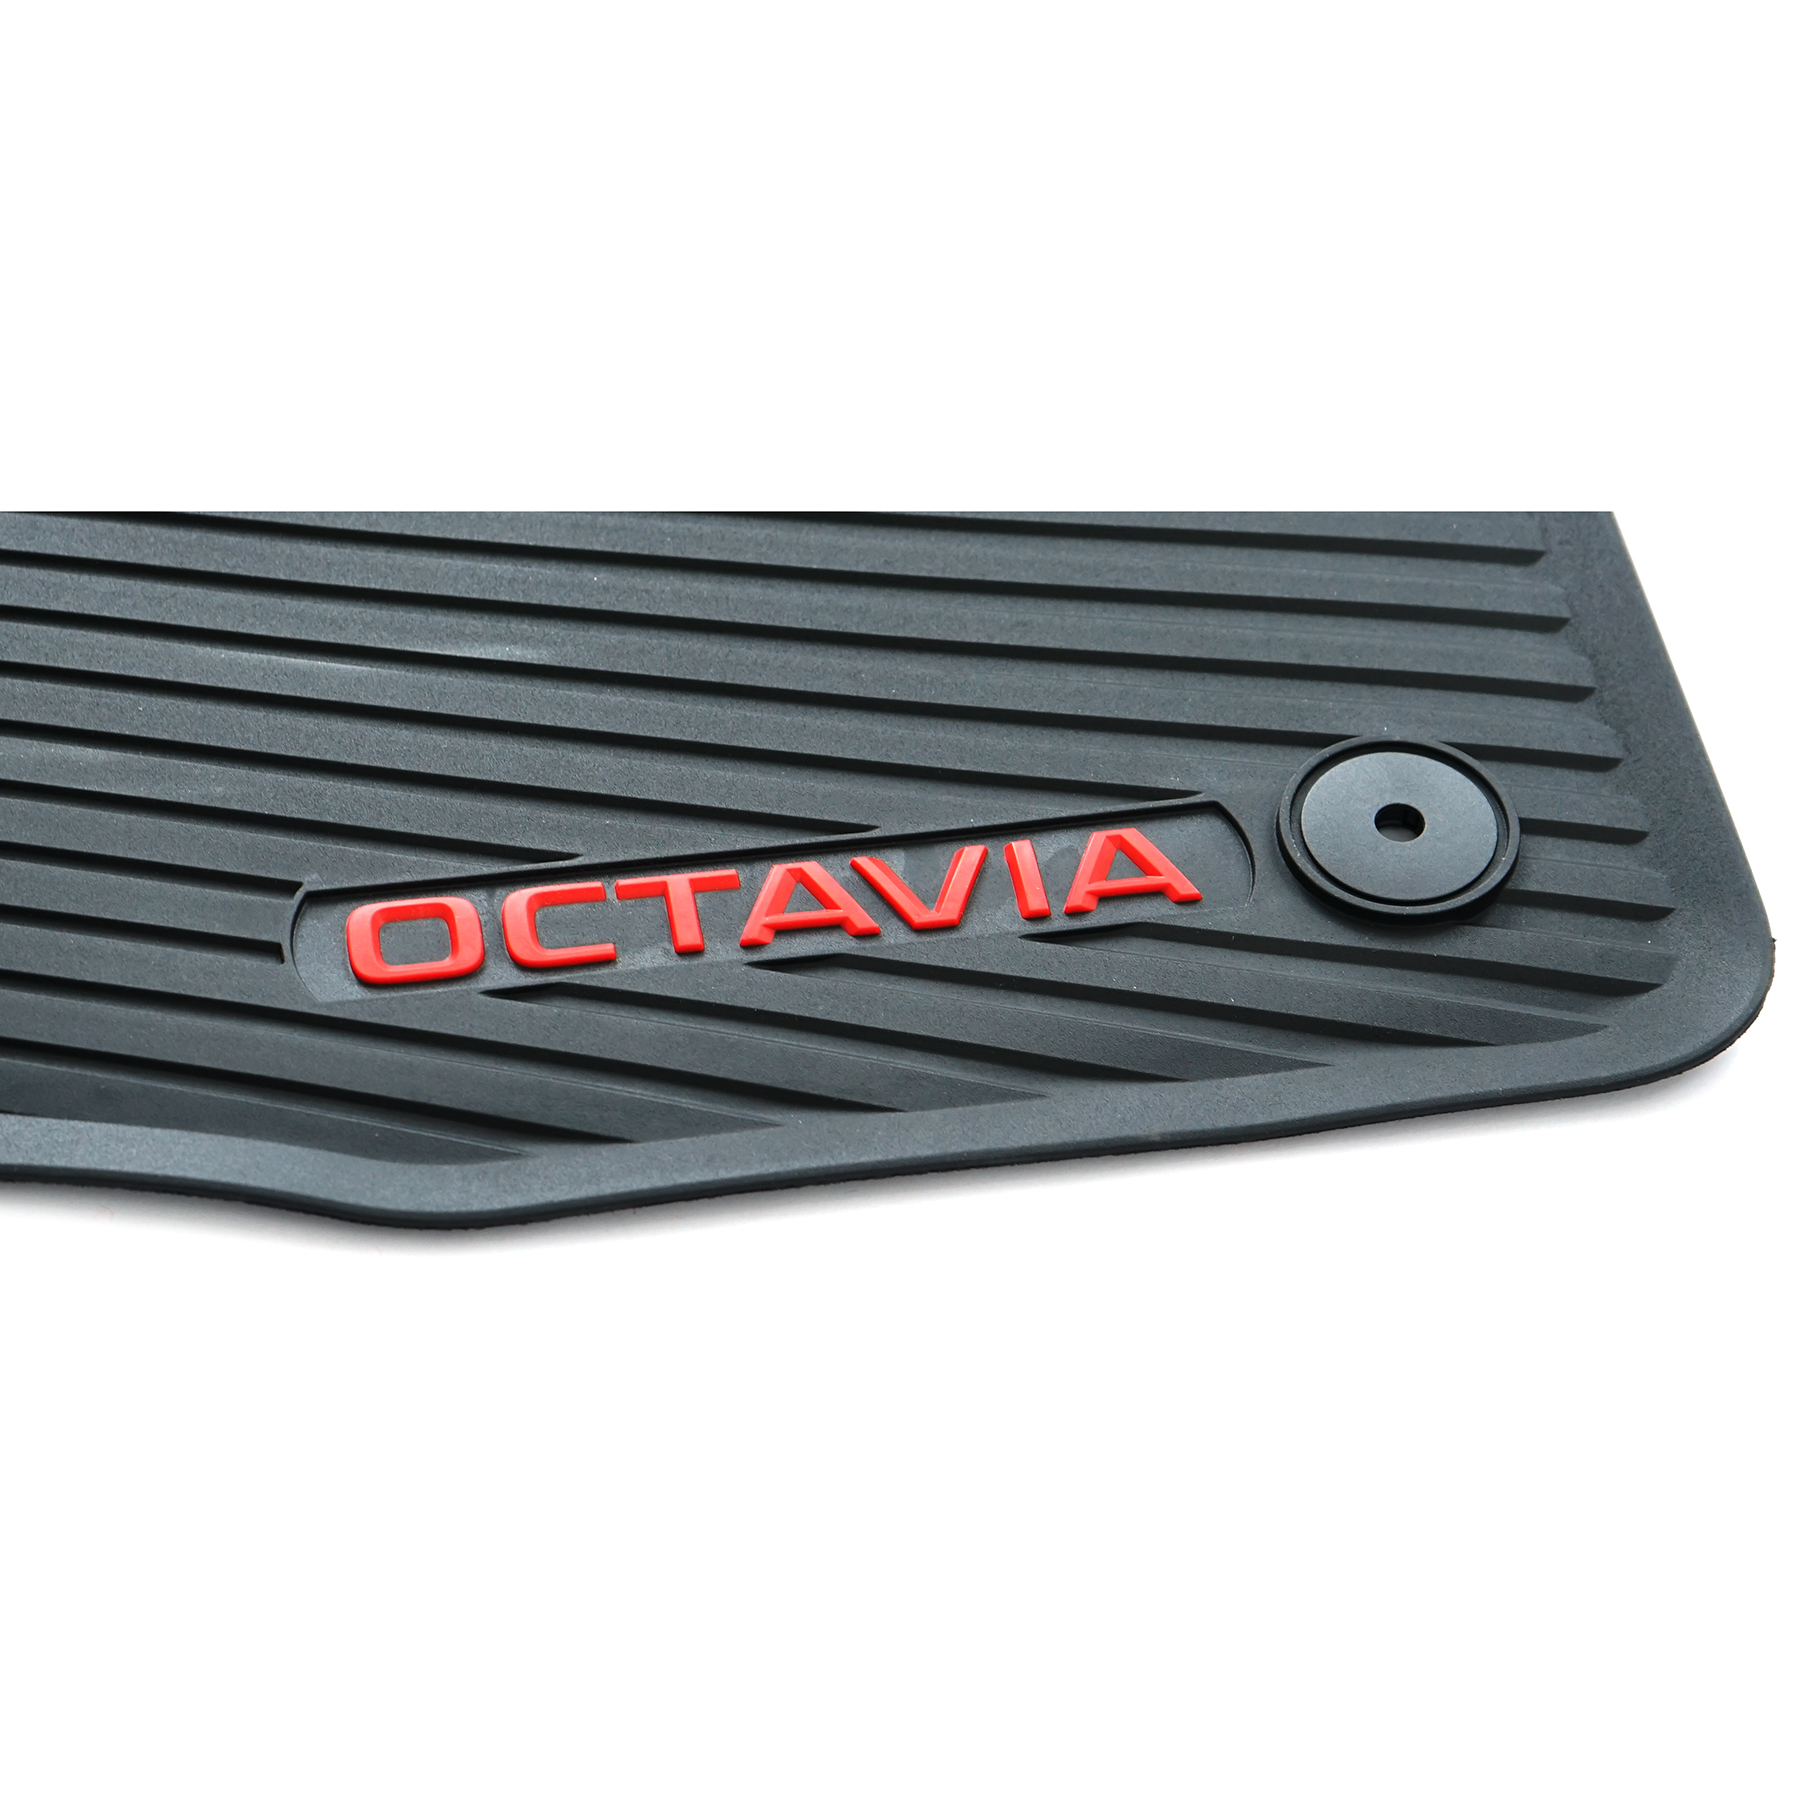 Original Skoda Gummifußmatten Set Fußmatten schwarz Octavia IV roter schriftzug